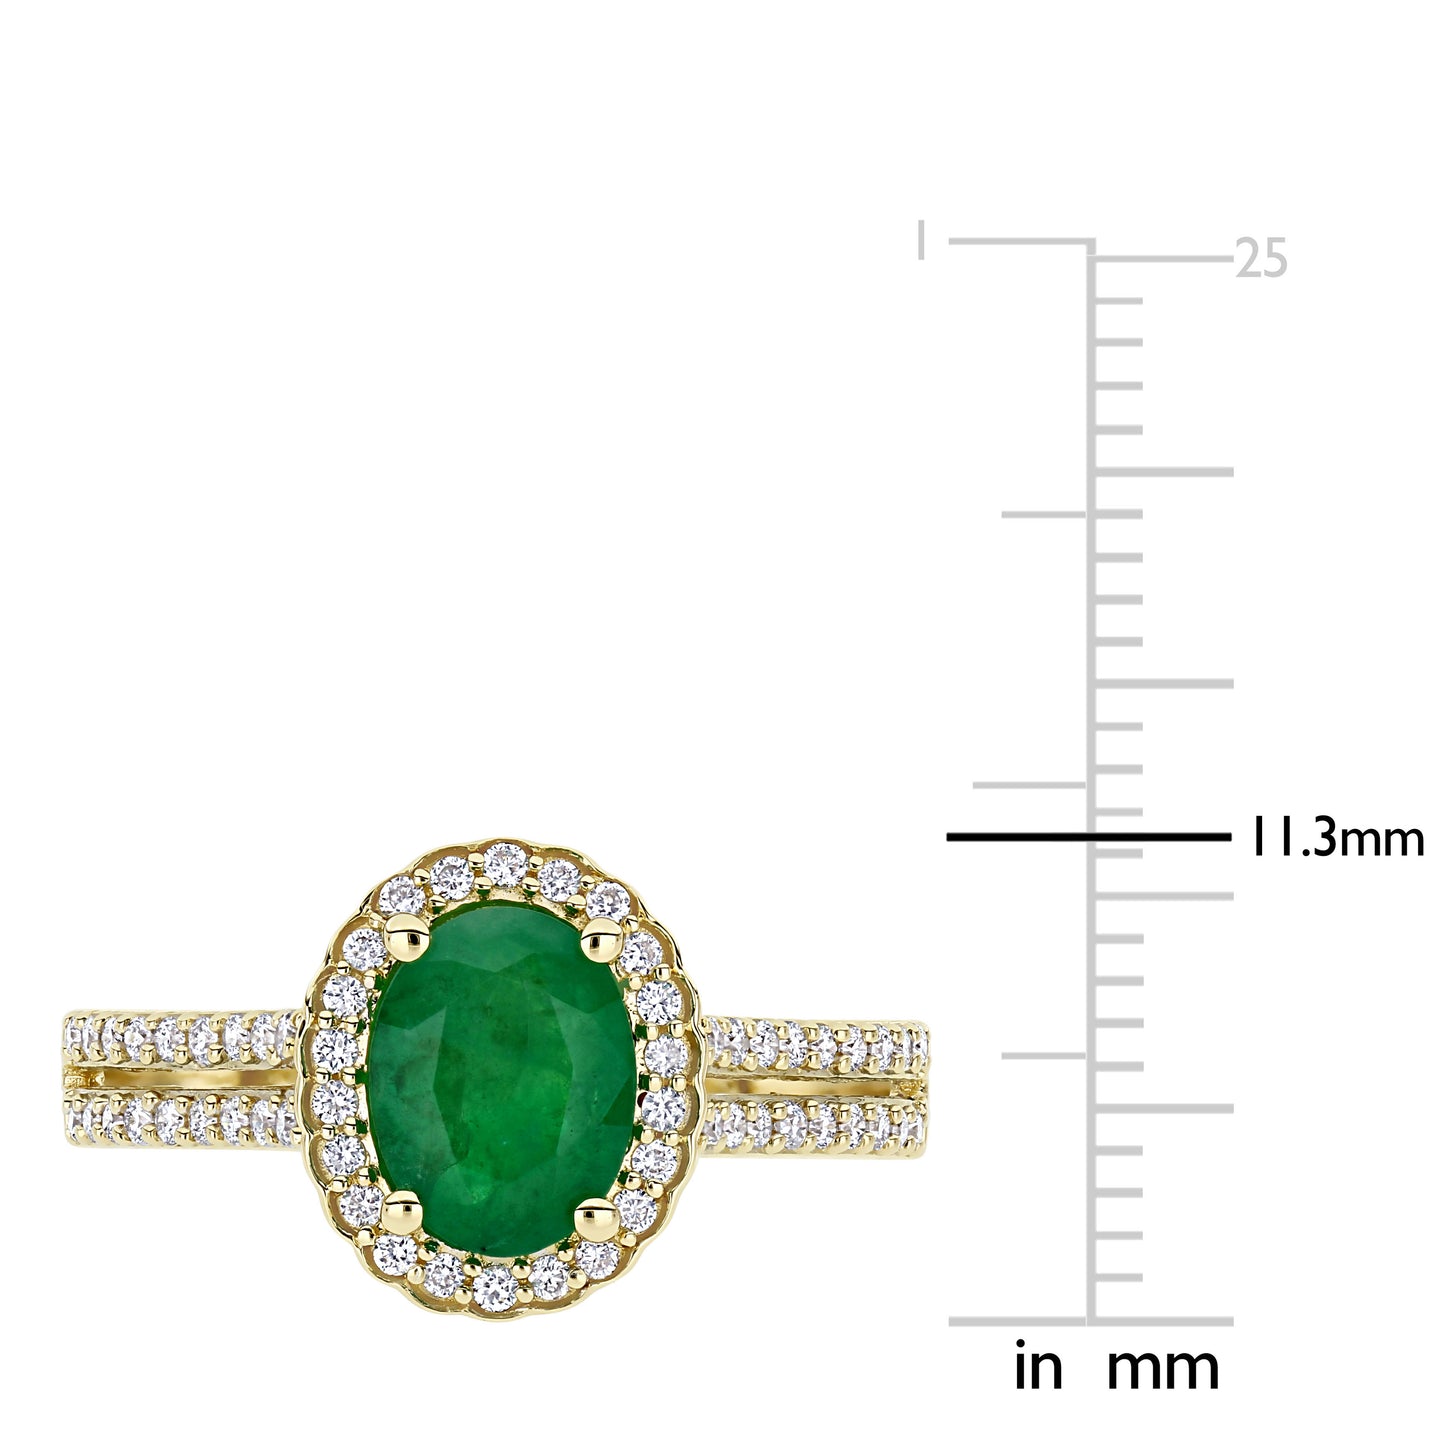 Oval Cut Emerald & Diamond Ring in 14k Yellow Gold